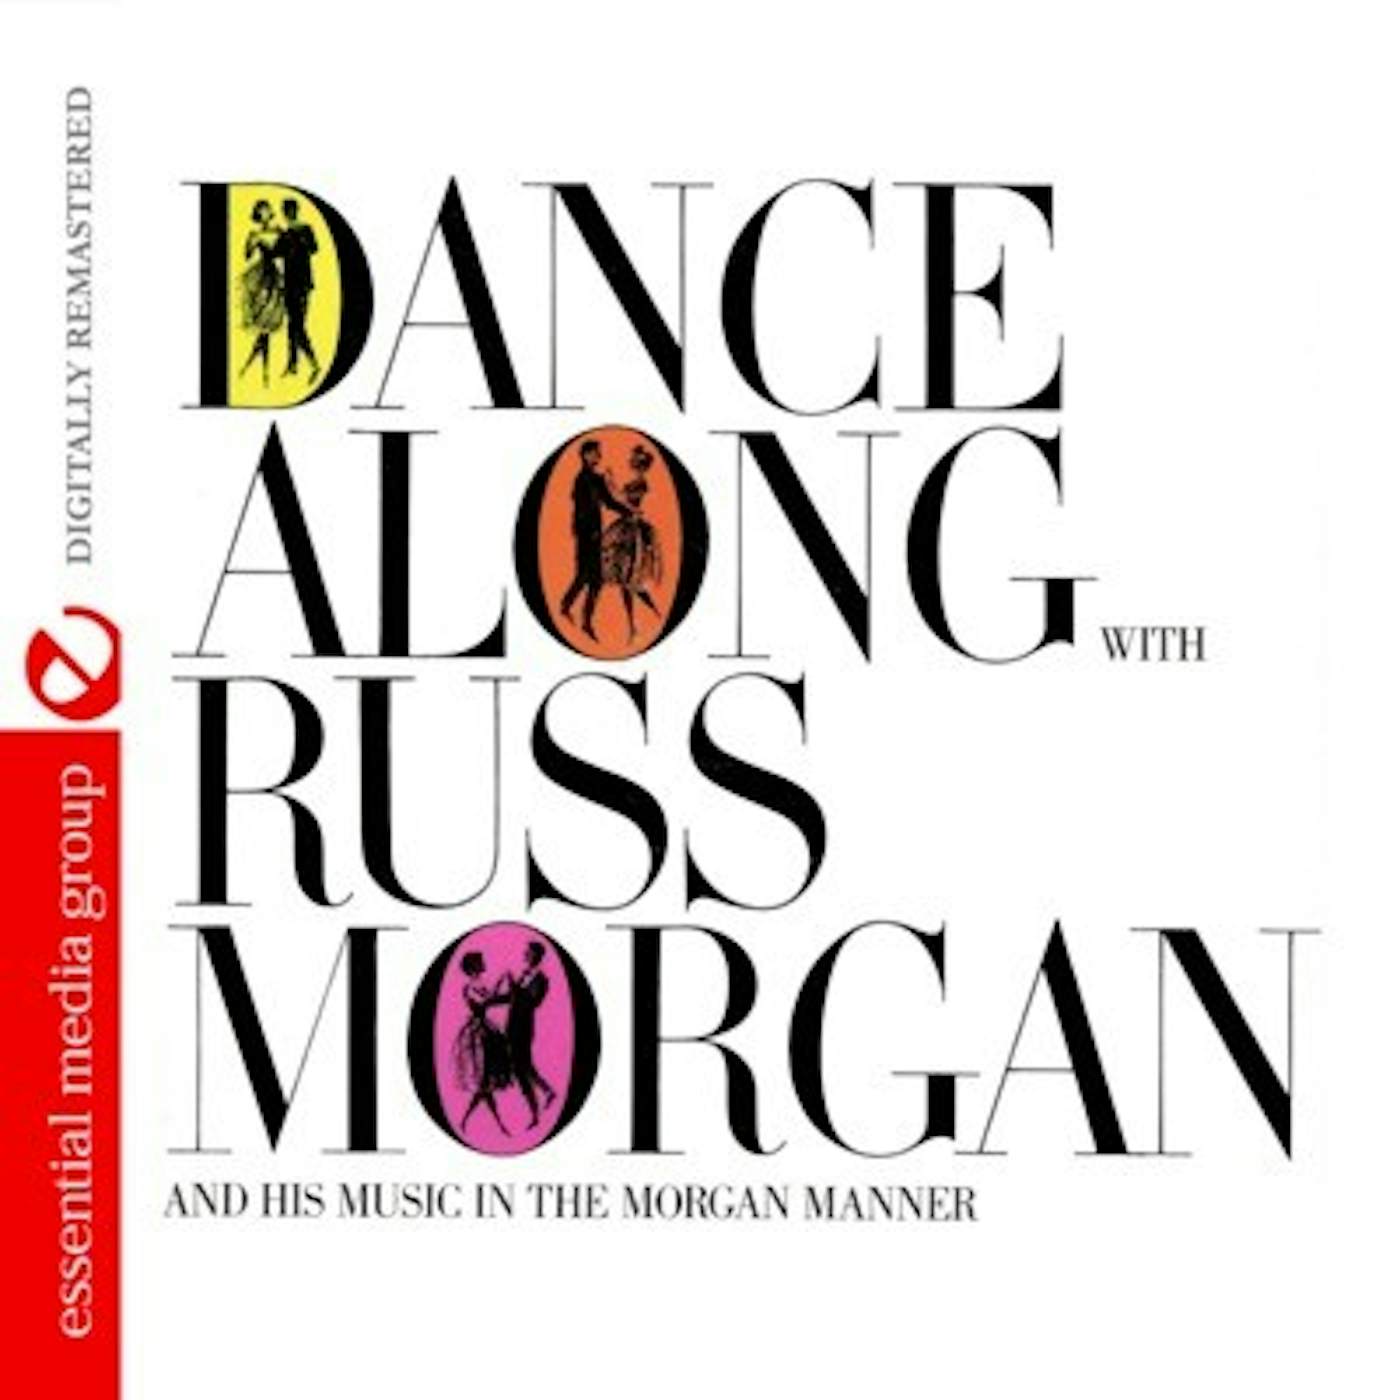 Russ Morgan DANCE ALONG WITH CD